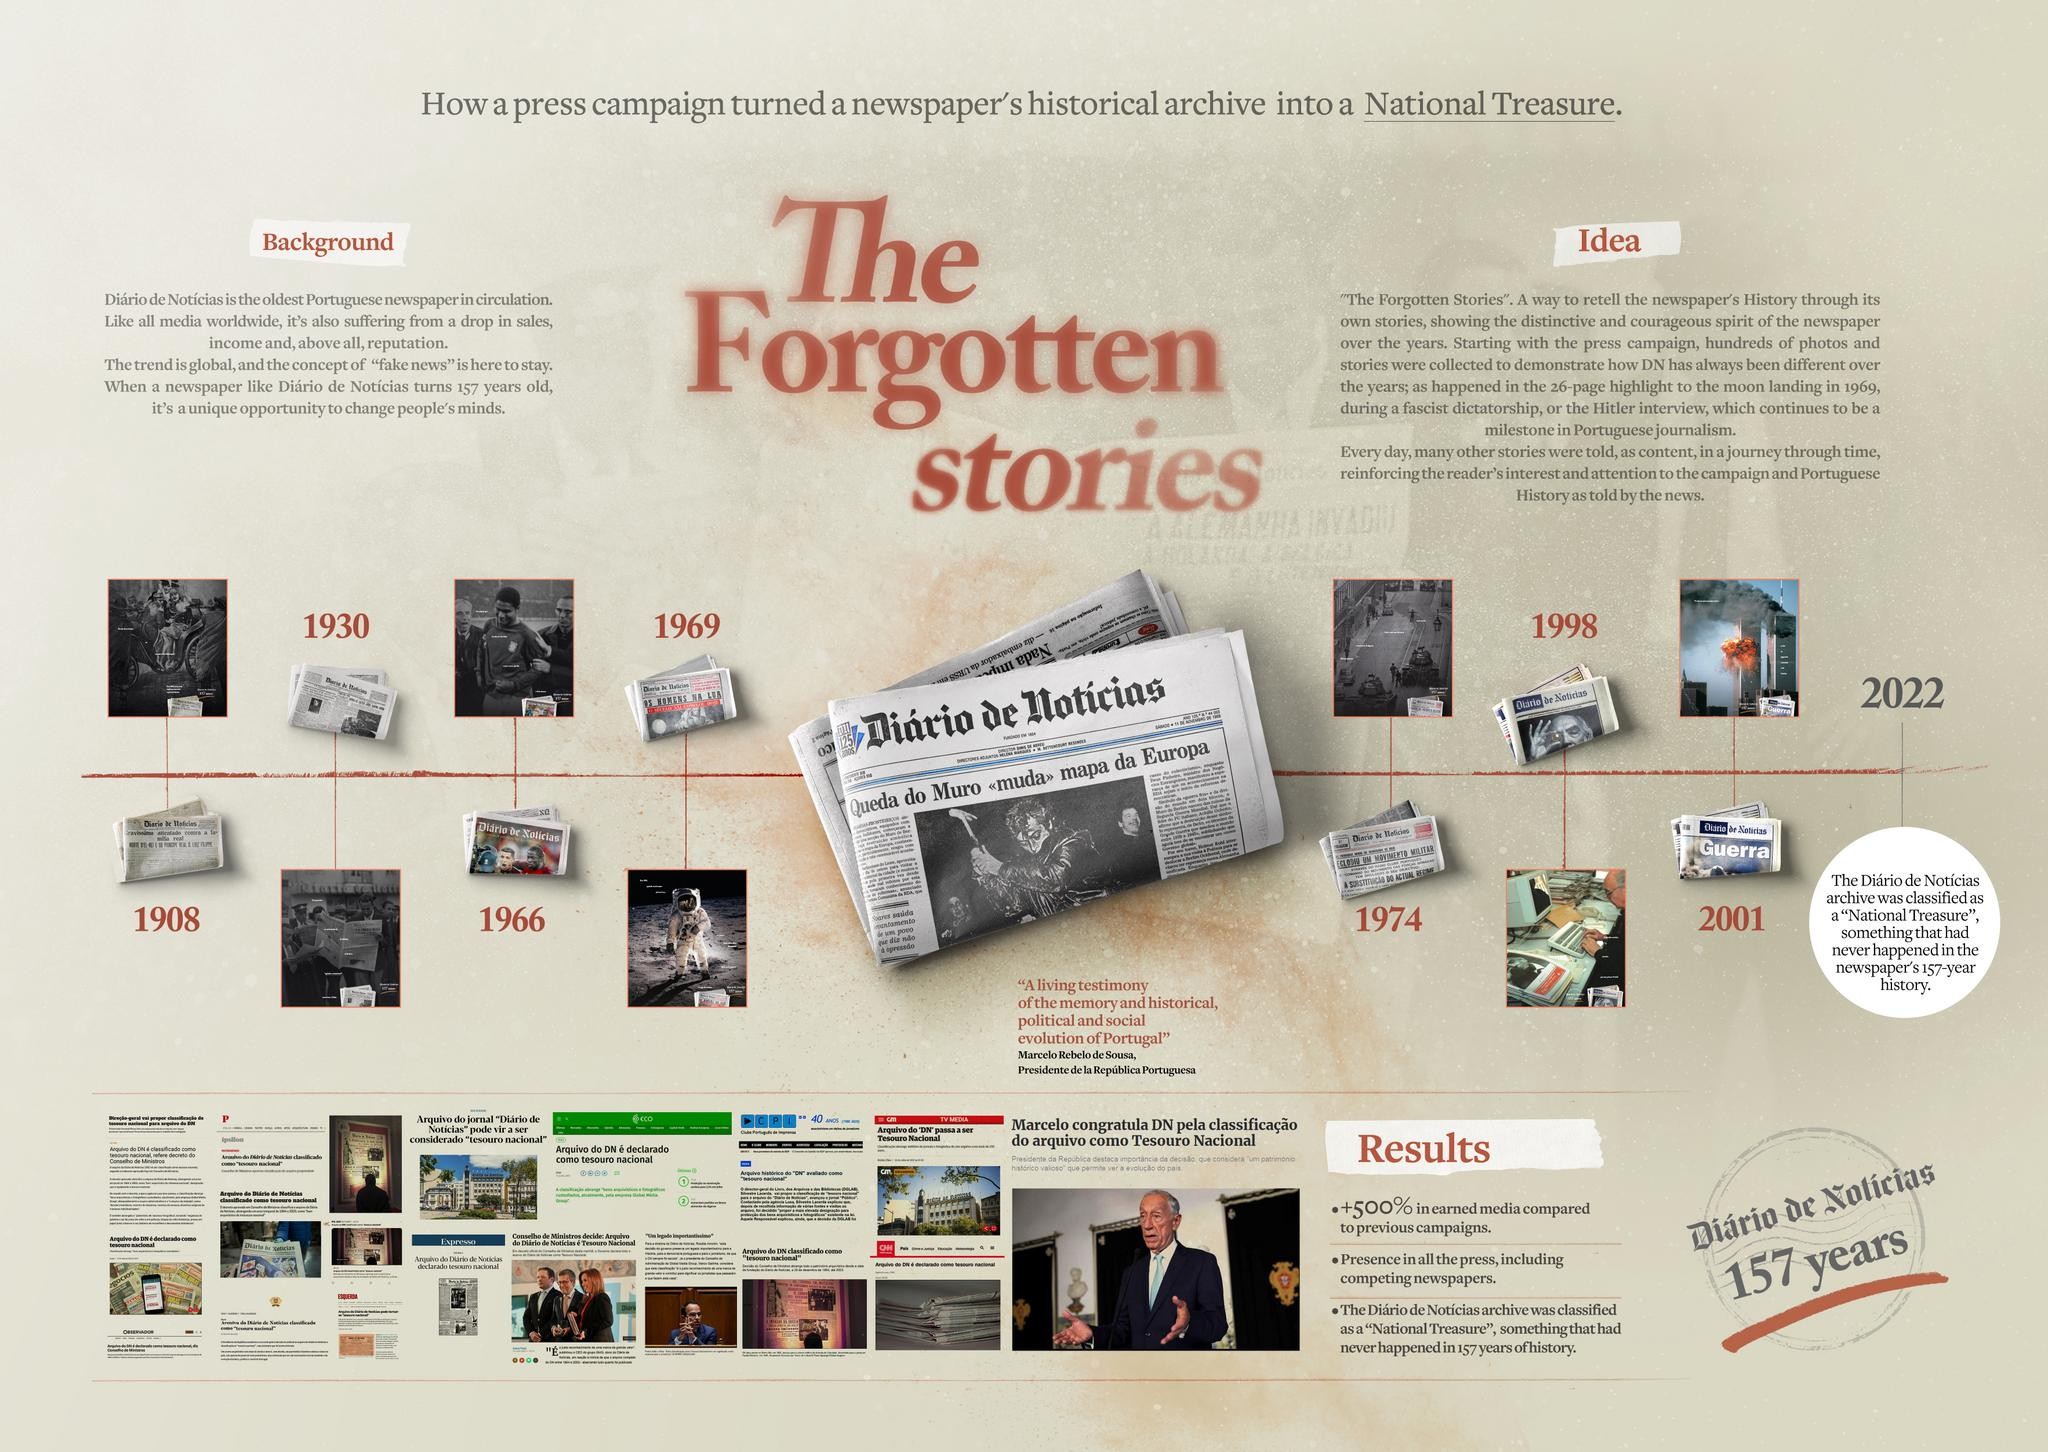 The Forgotten Stories